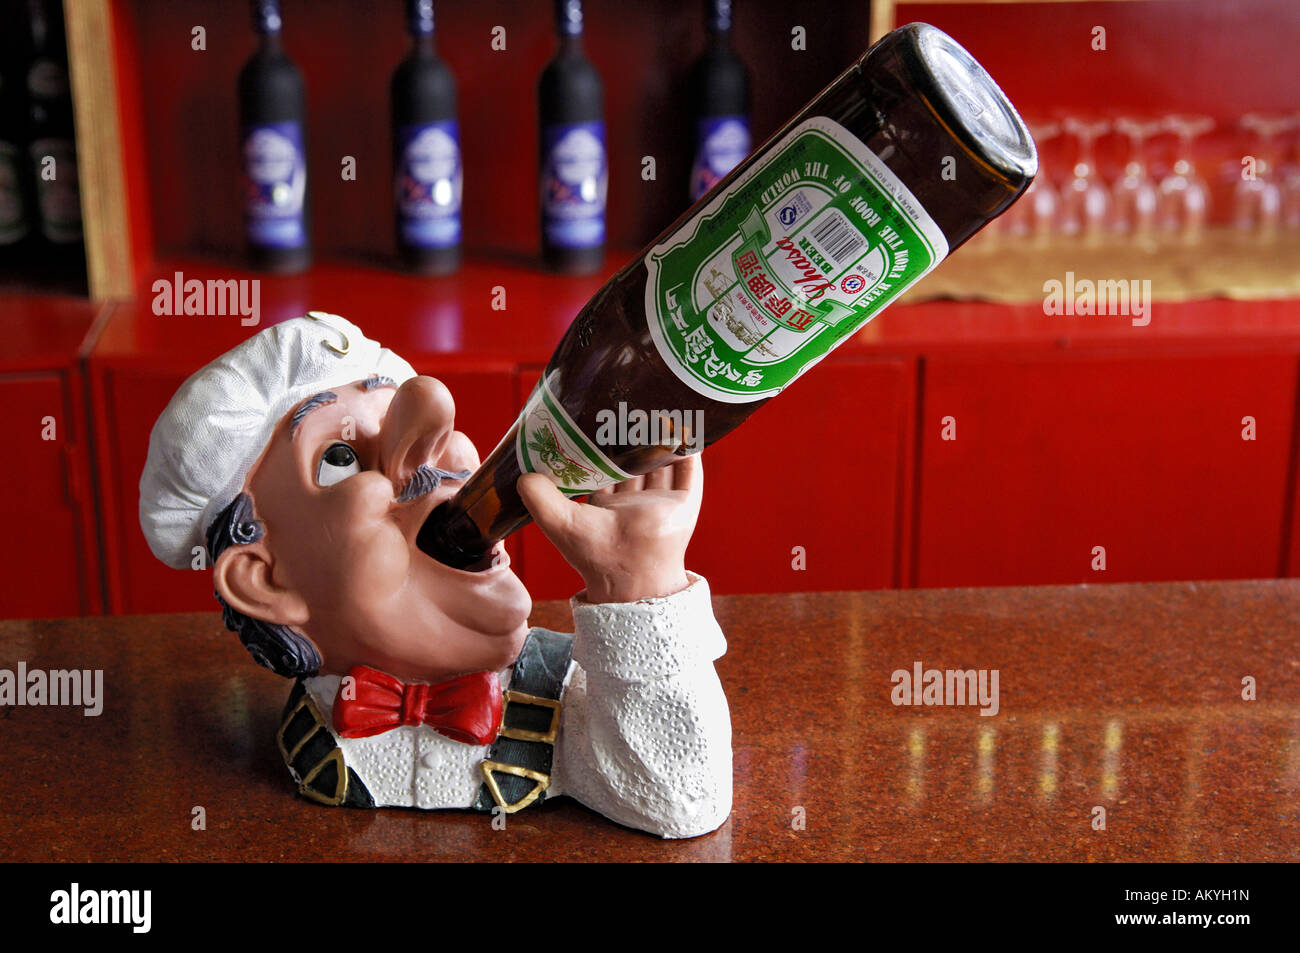 Lustige Bier Werbung, Lhasa, Tibet Stockfotografie - Alamy